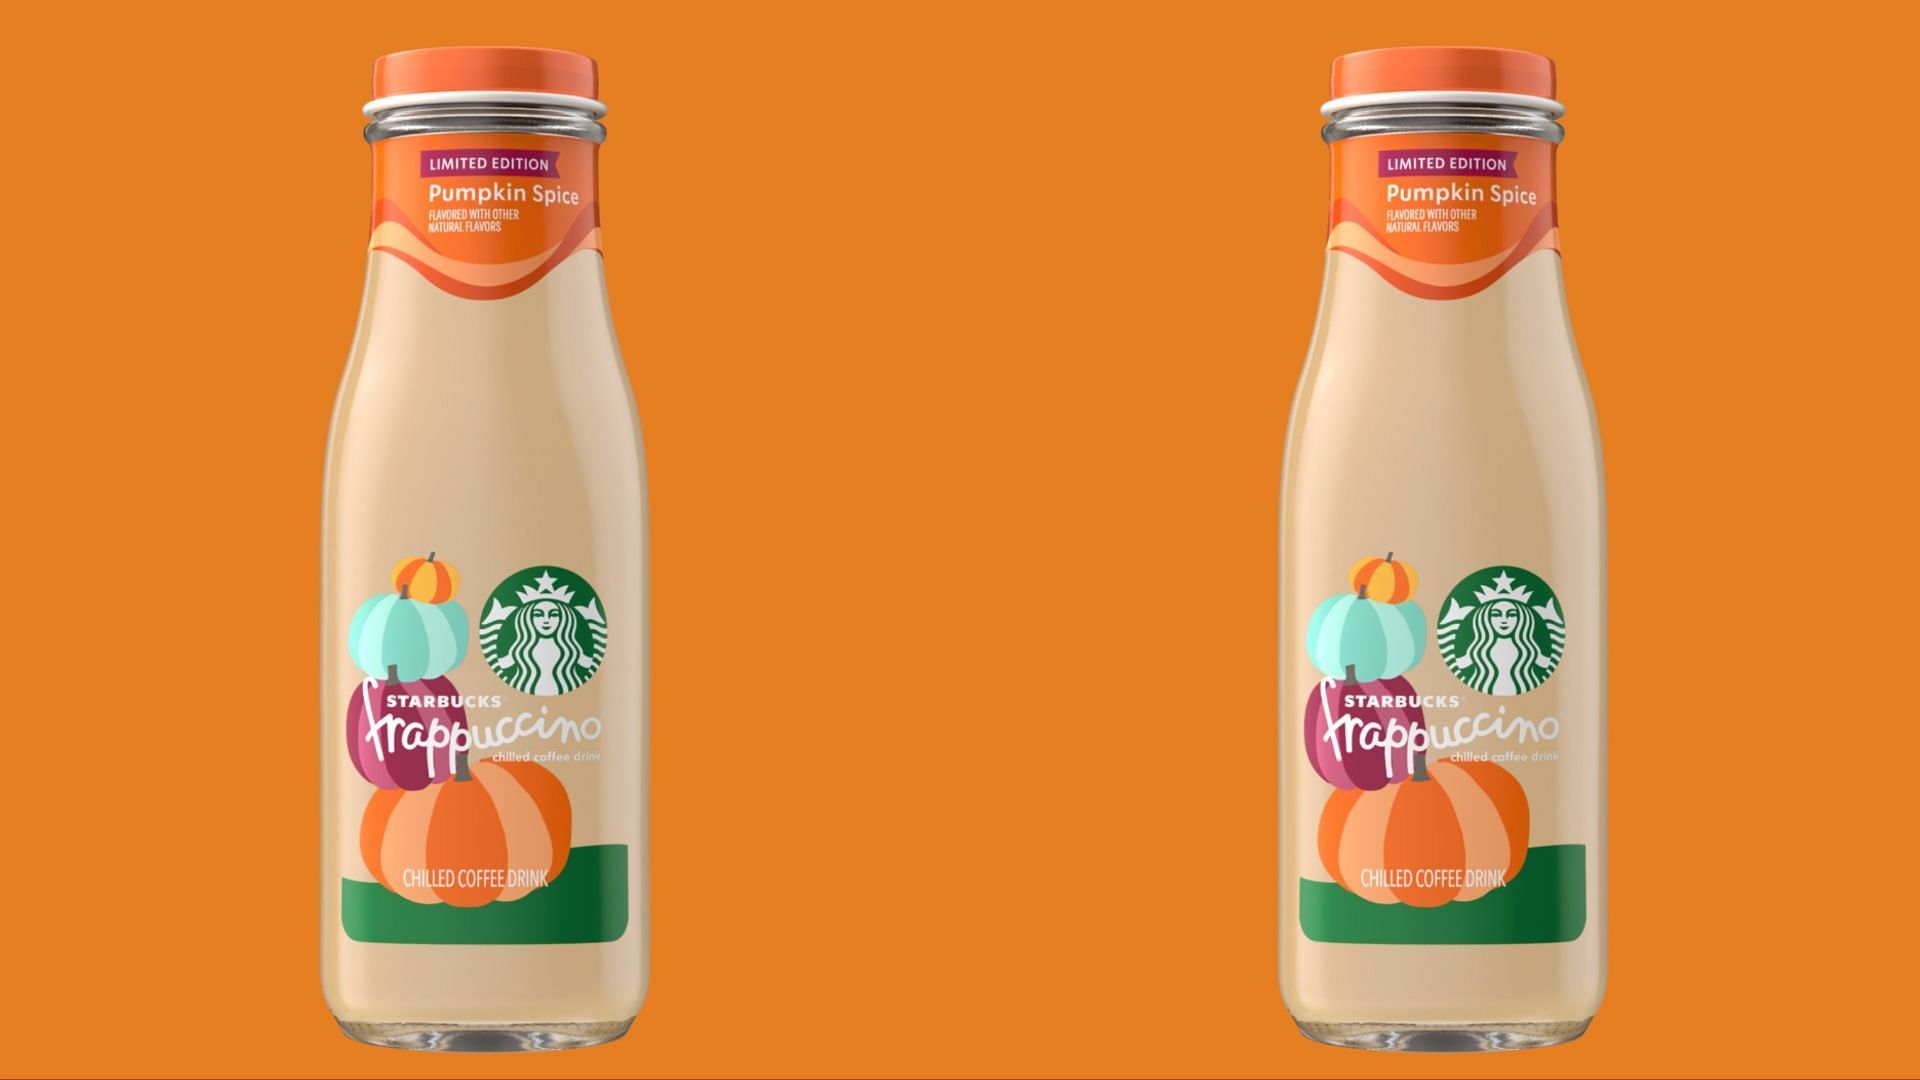 Pumpkin Spice Frappuccino Chilled Coffee Drink (Image via Starbucks)